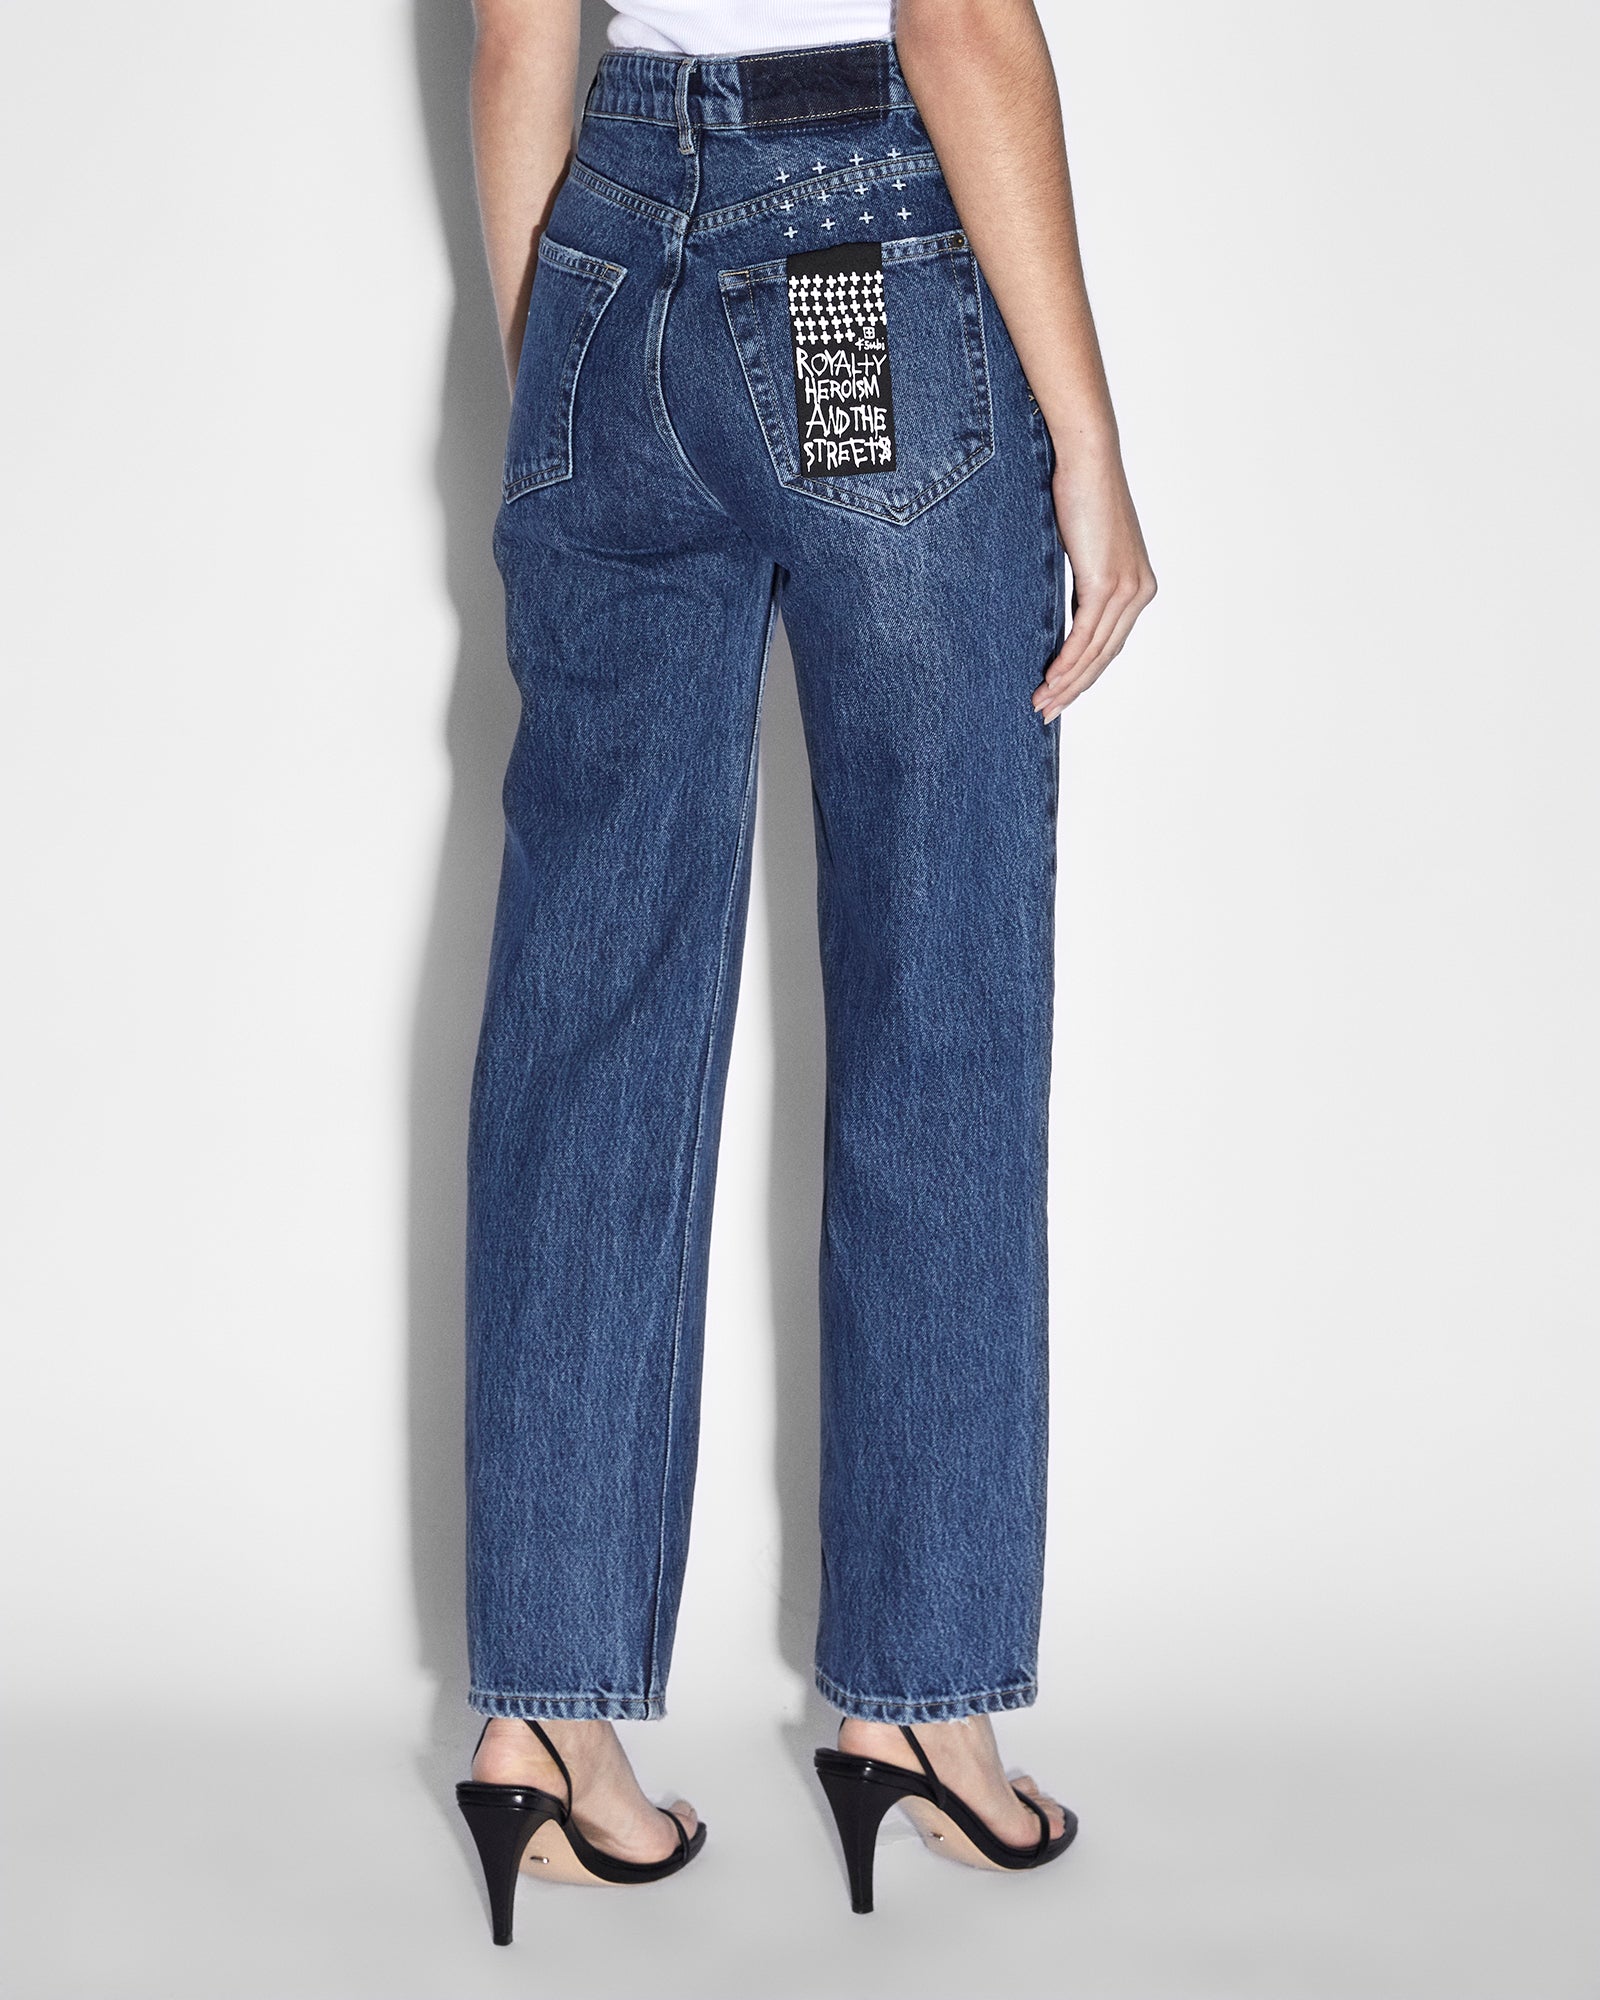 New Summer European And American Elastic Hole Female Jeans Denim